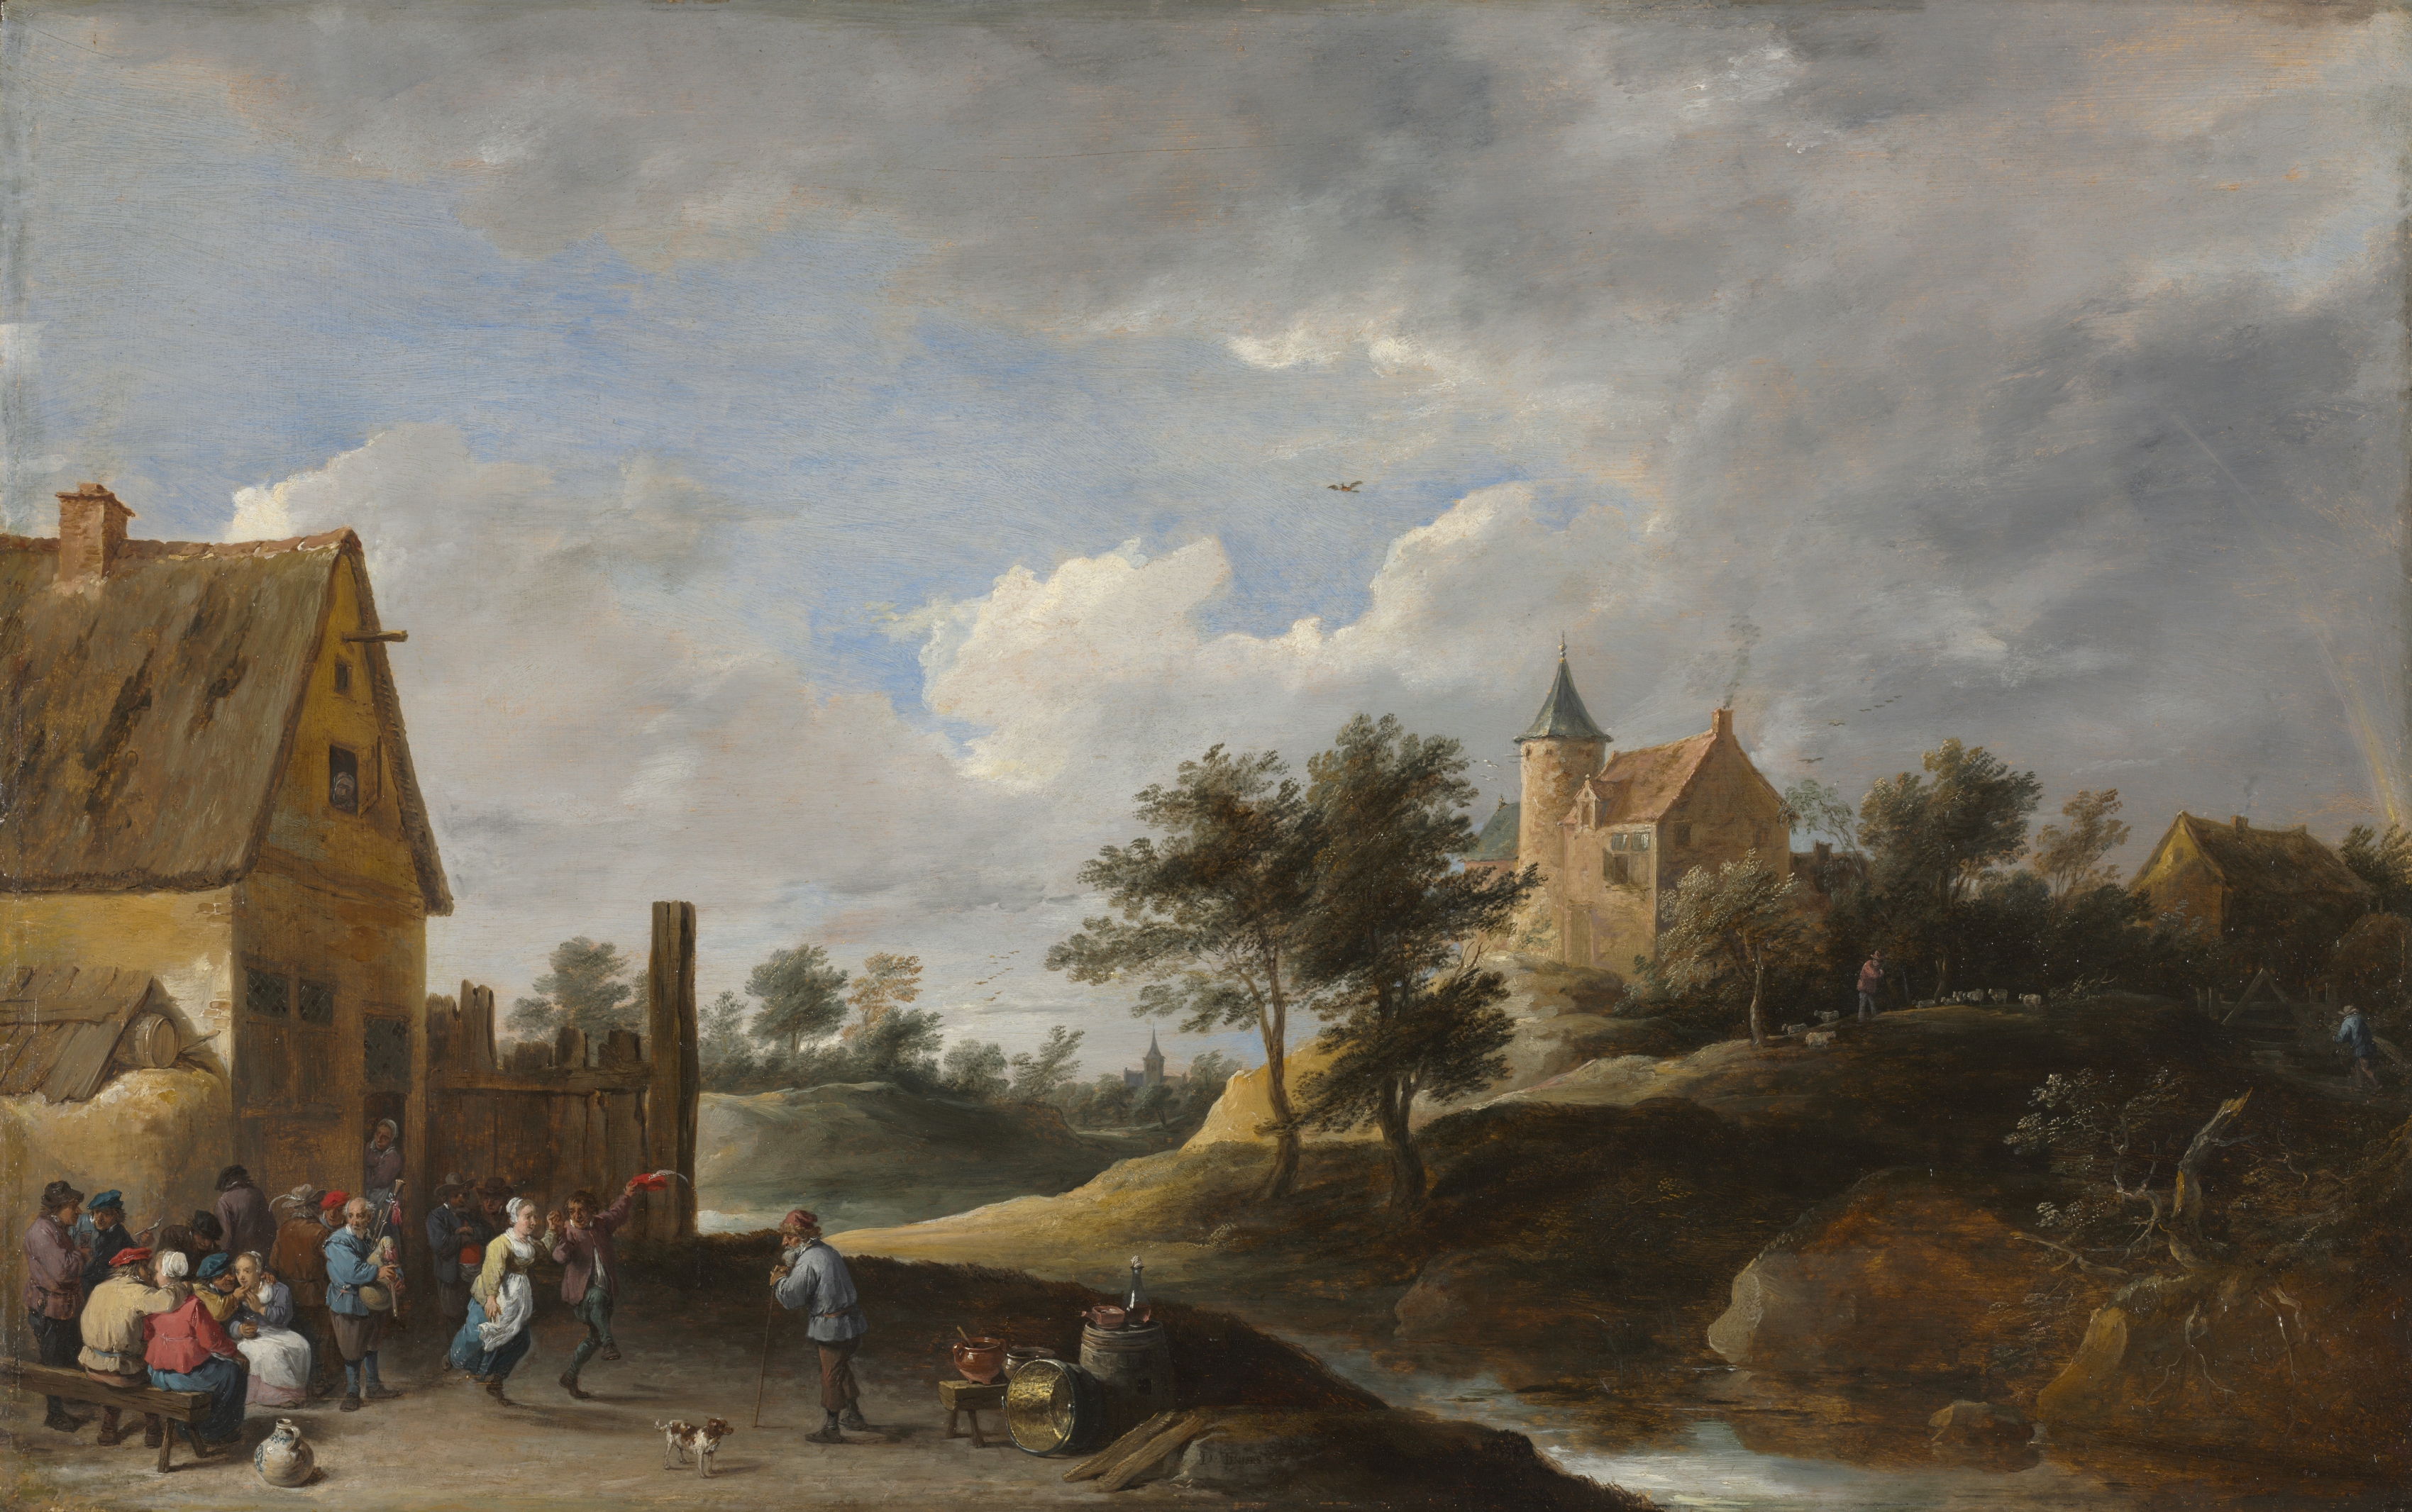 Landscape with Peasants Dancing